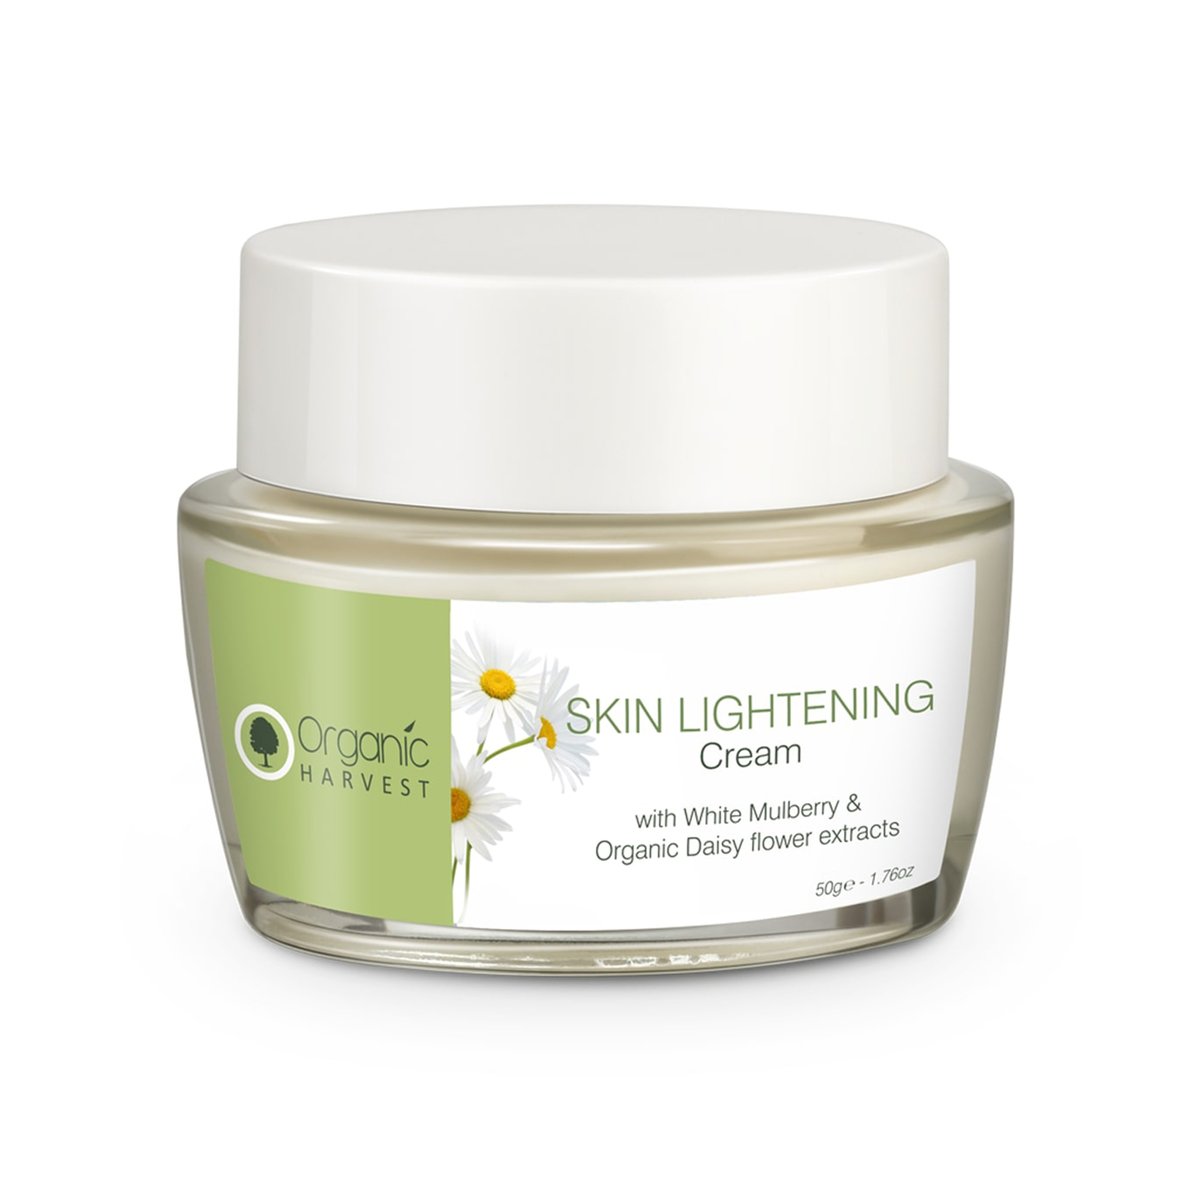 Organic Harvest Skin Lightening Cream 50 g